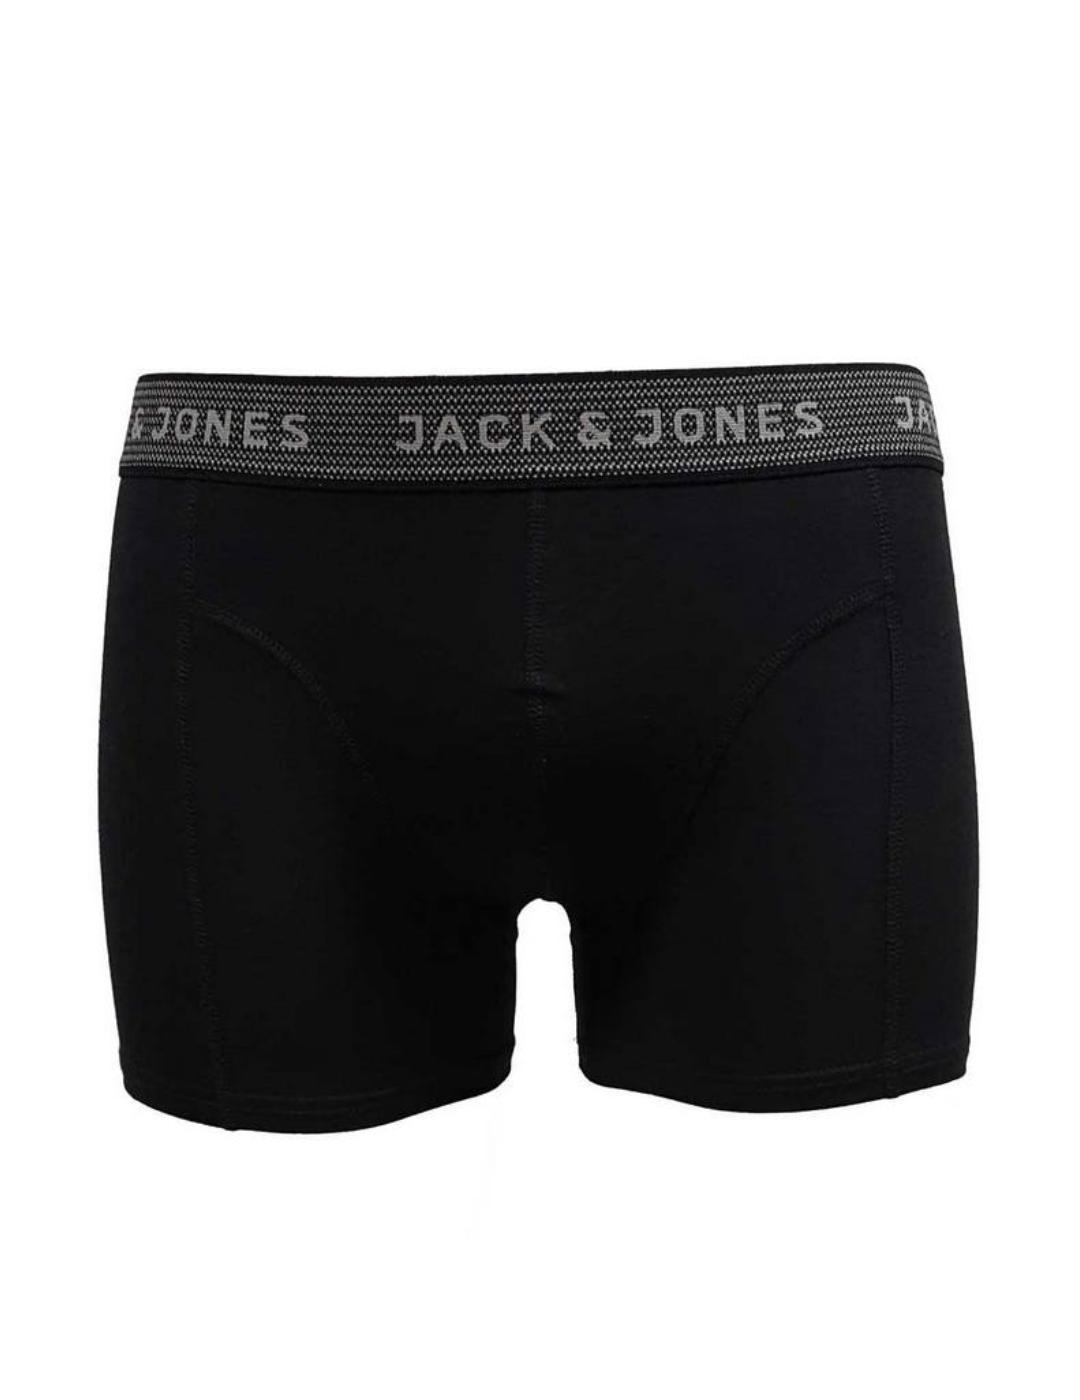 Íntimo Jack&Jones Trunks gris oscuro para hombre